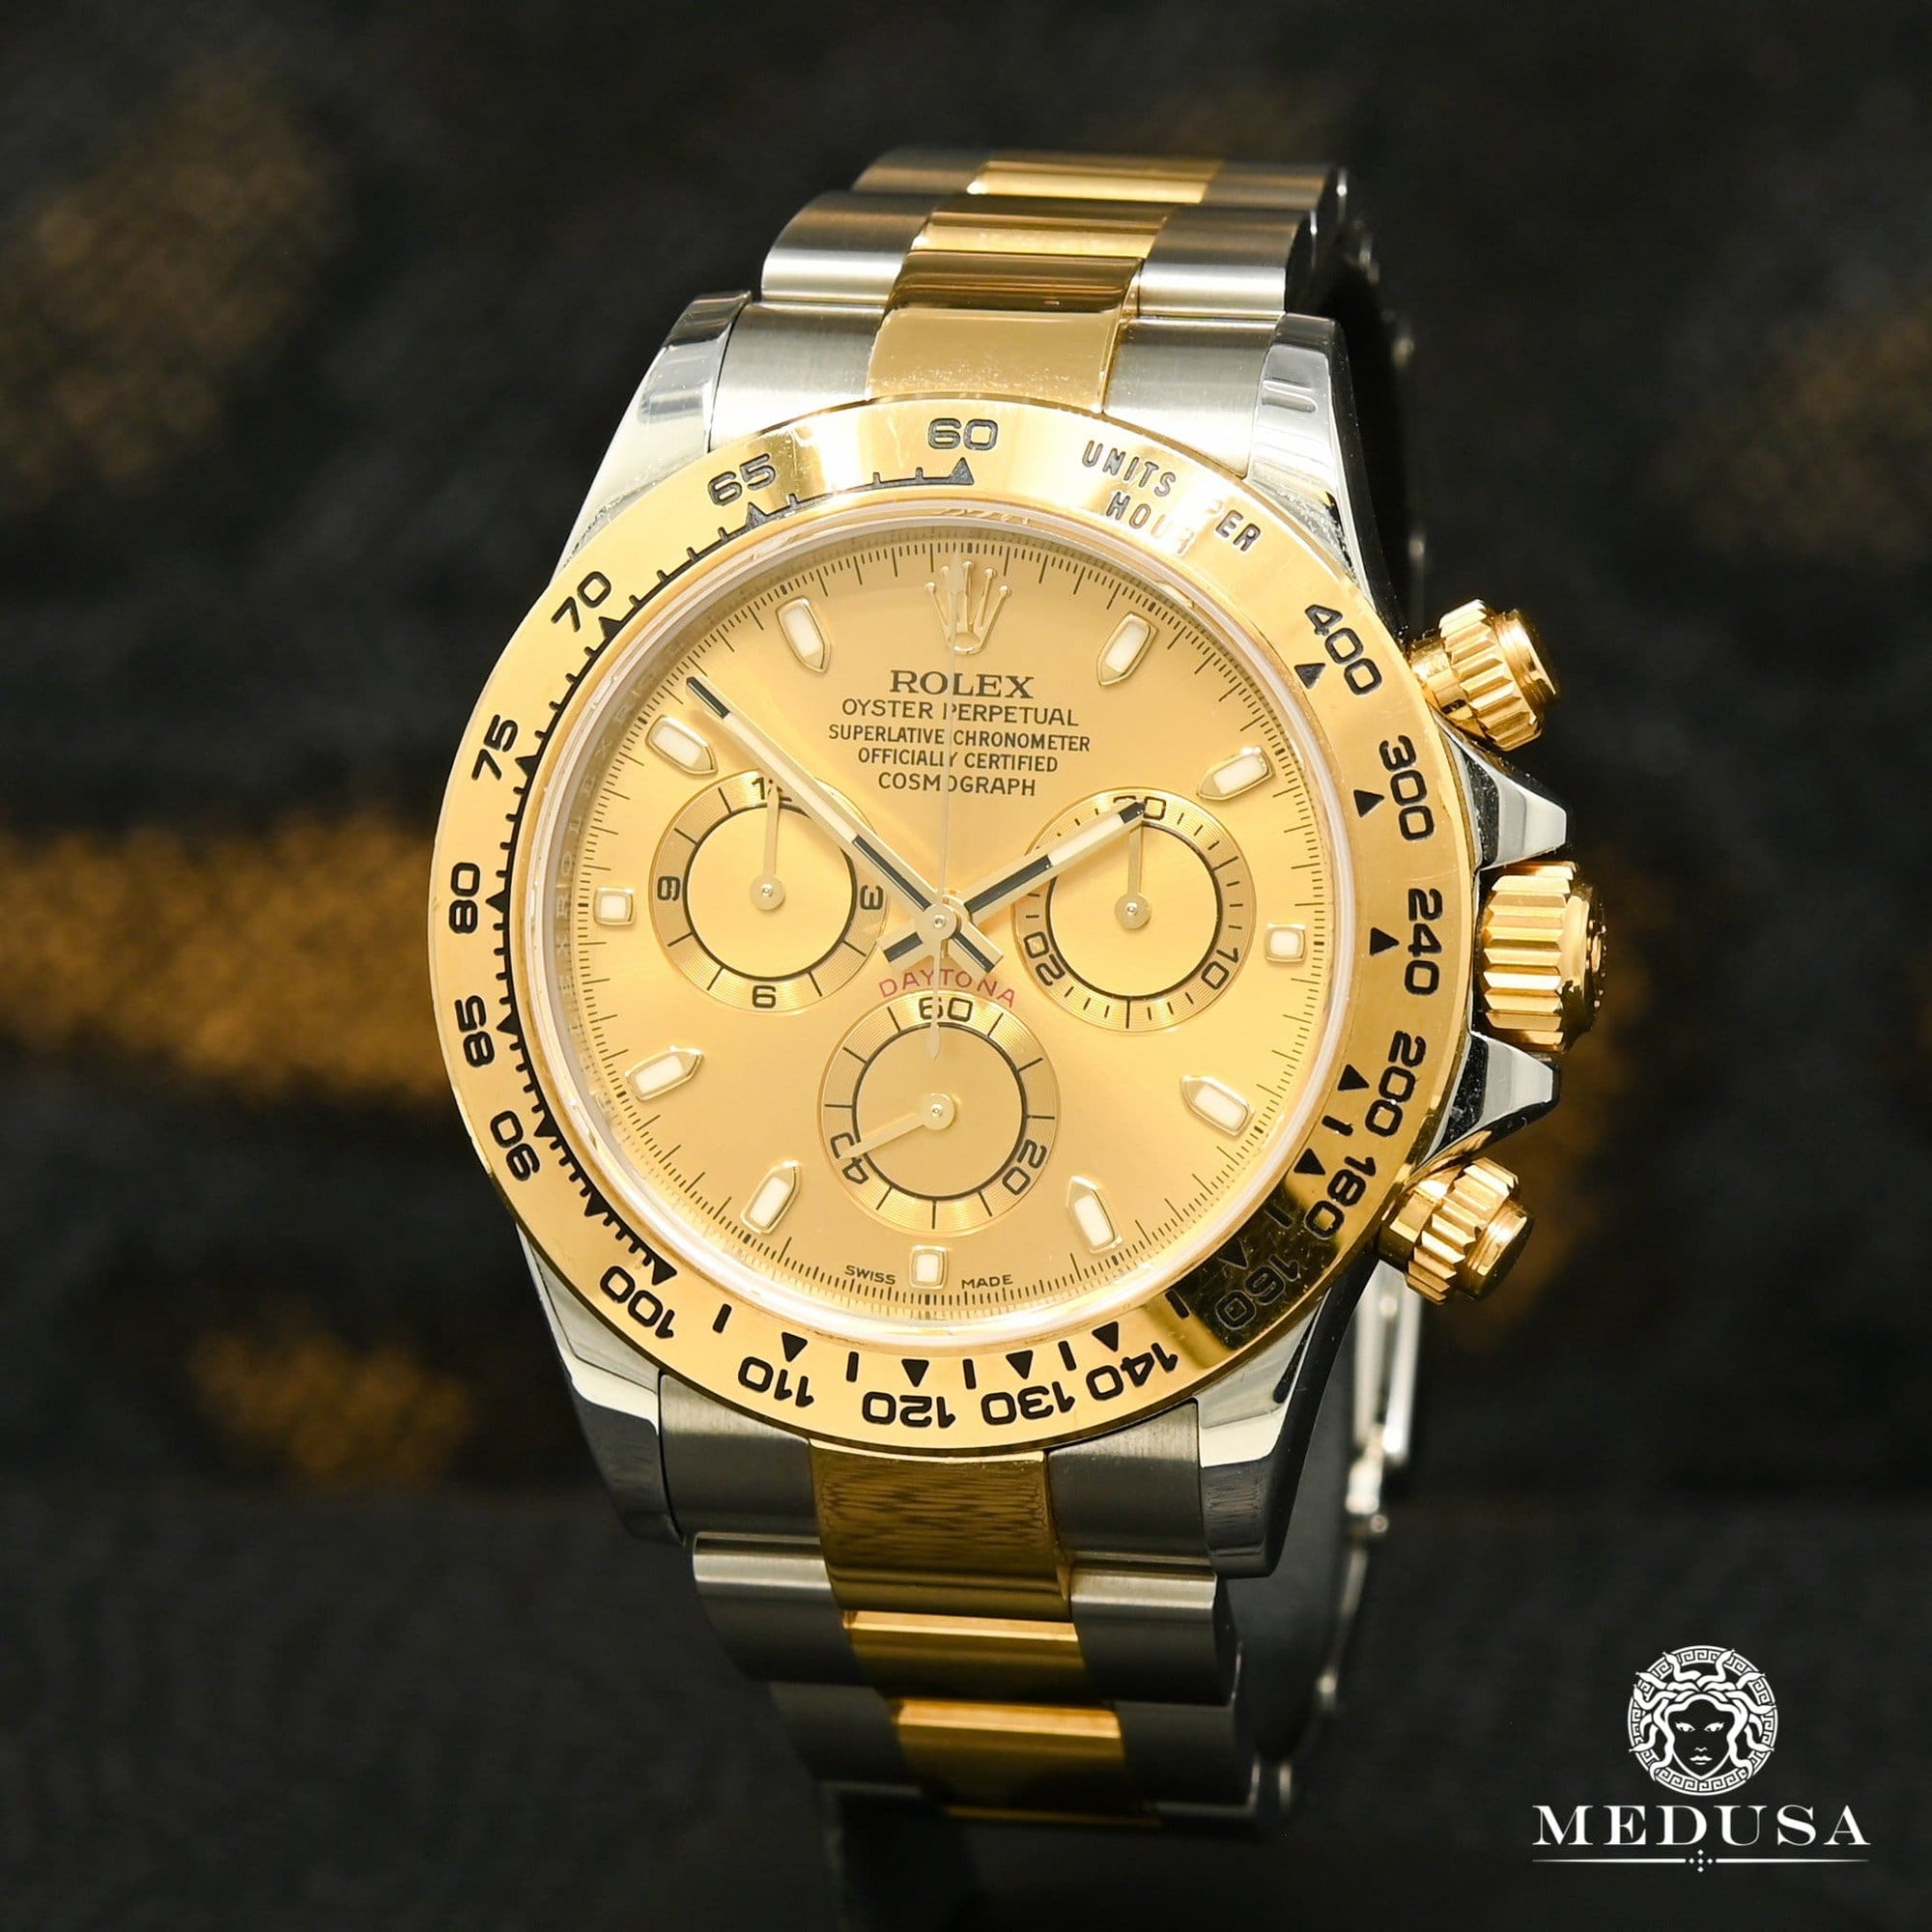 Rolex watch | Rolex Cosmograph Daytona 40mm Men's Watch - Champagne 2 Tones Gold 2 Tones